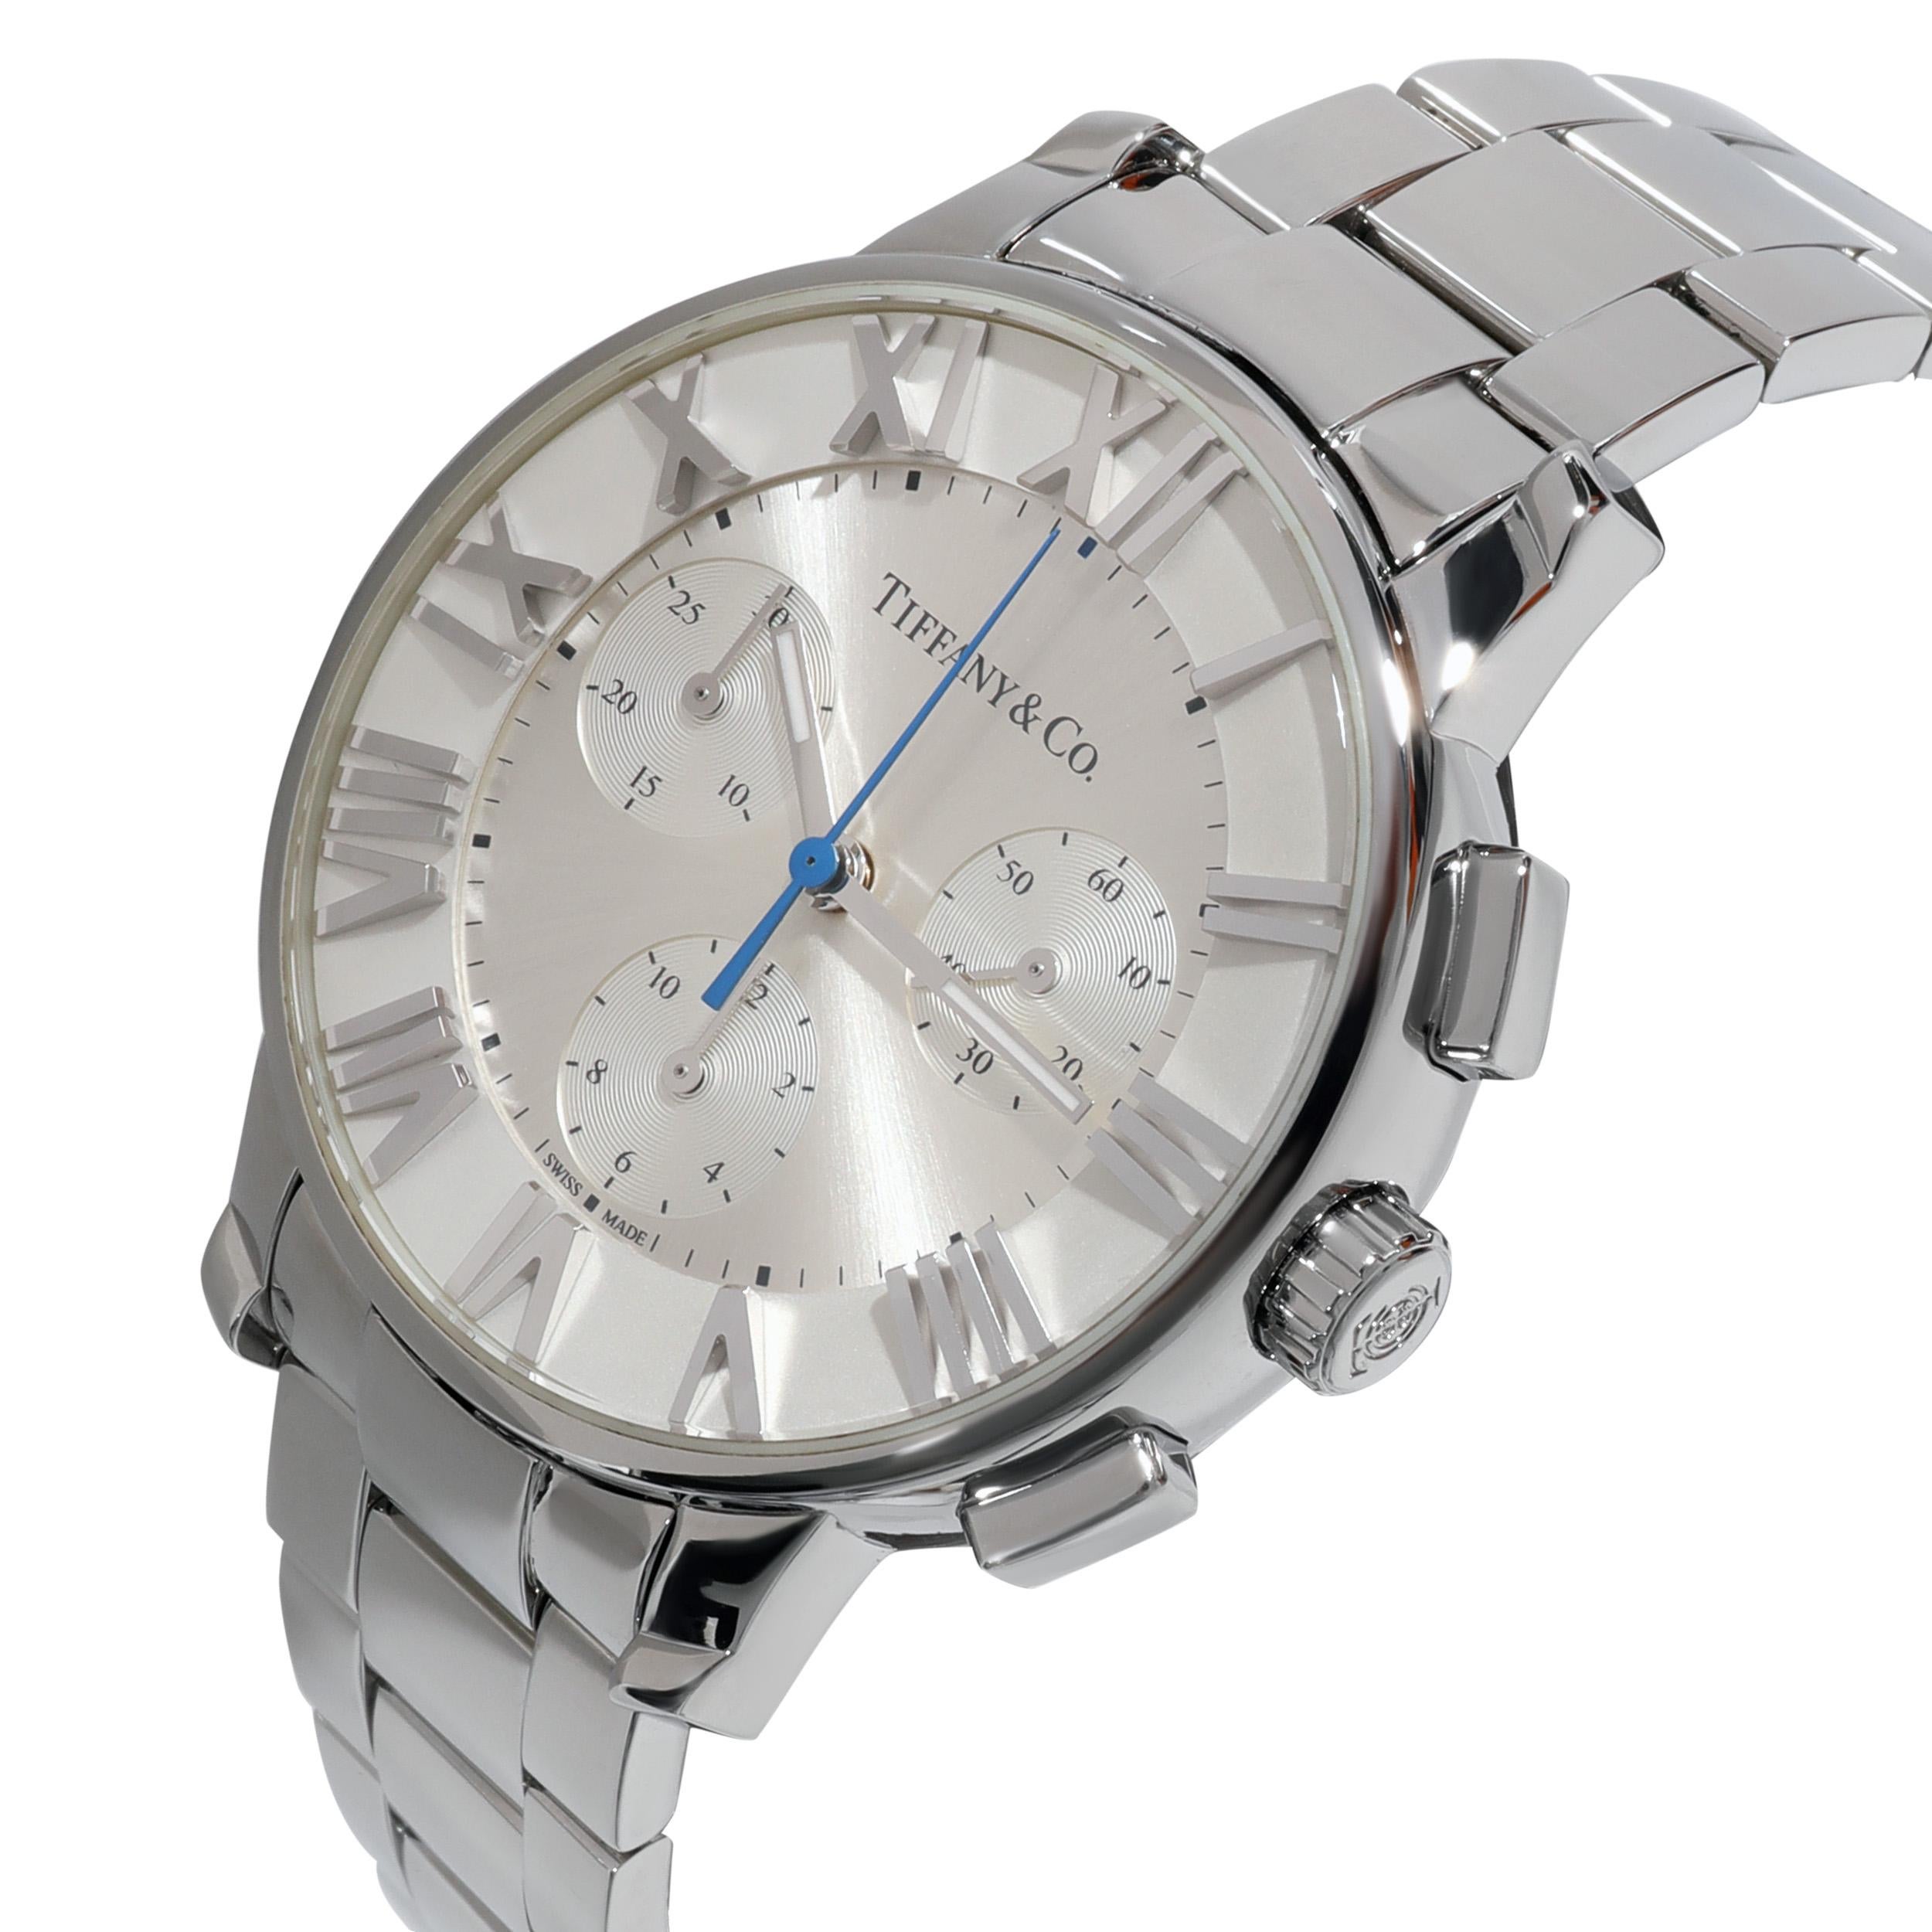 tiffany atlas chronograph watch